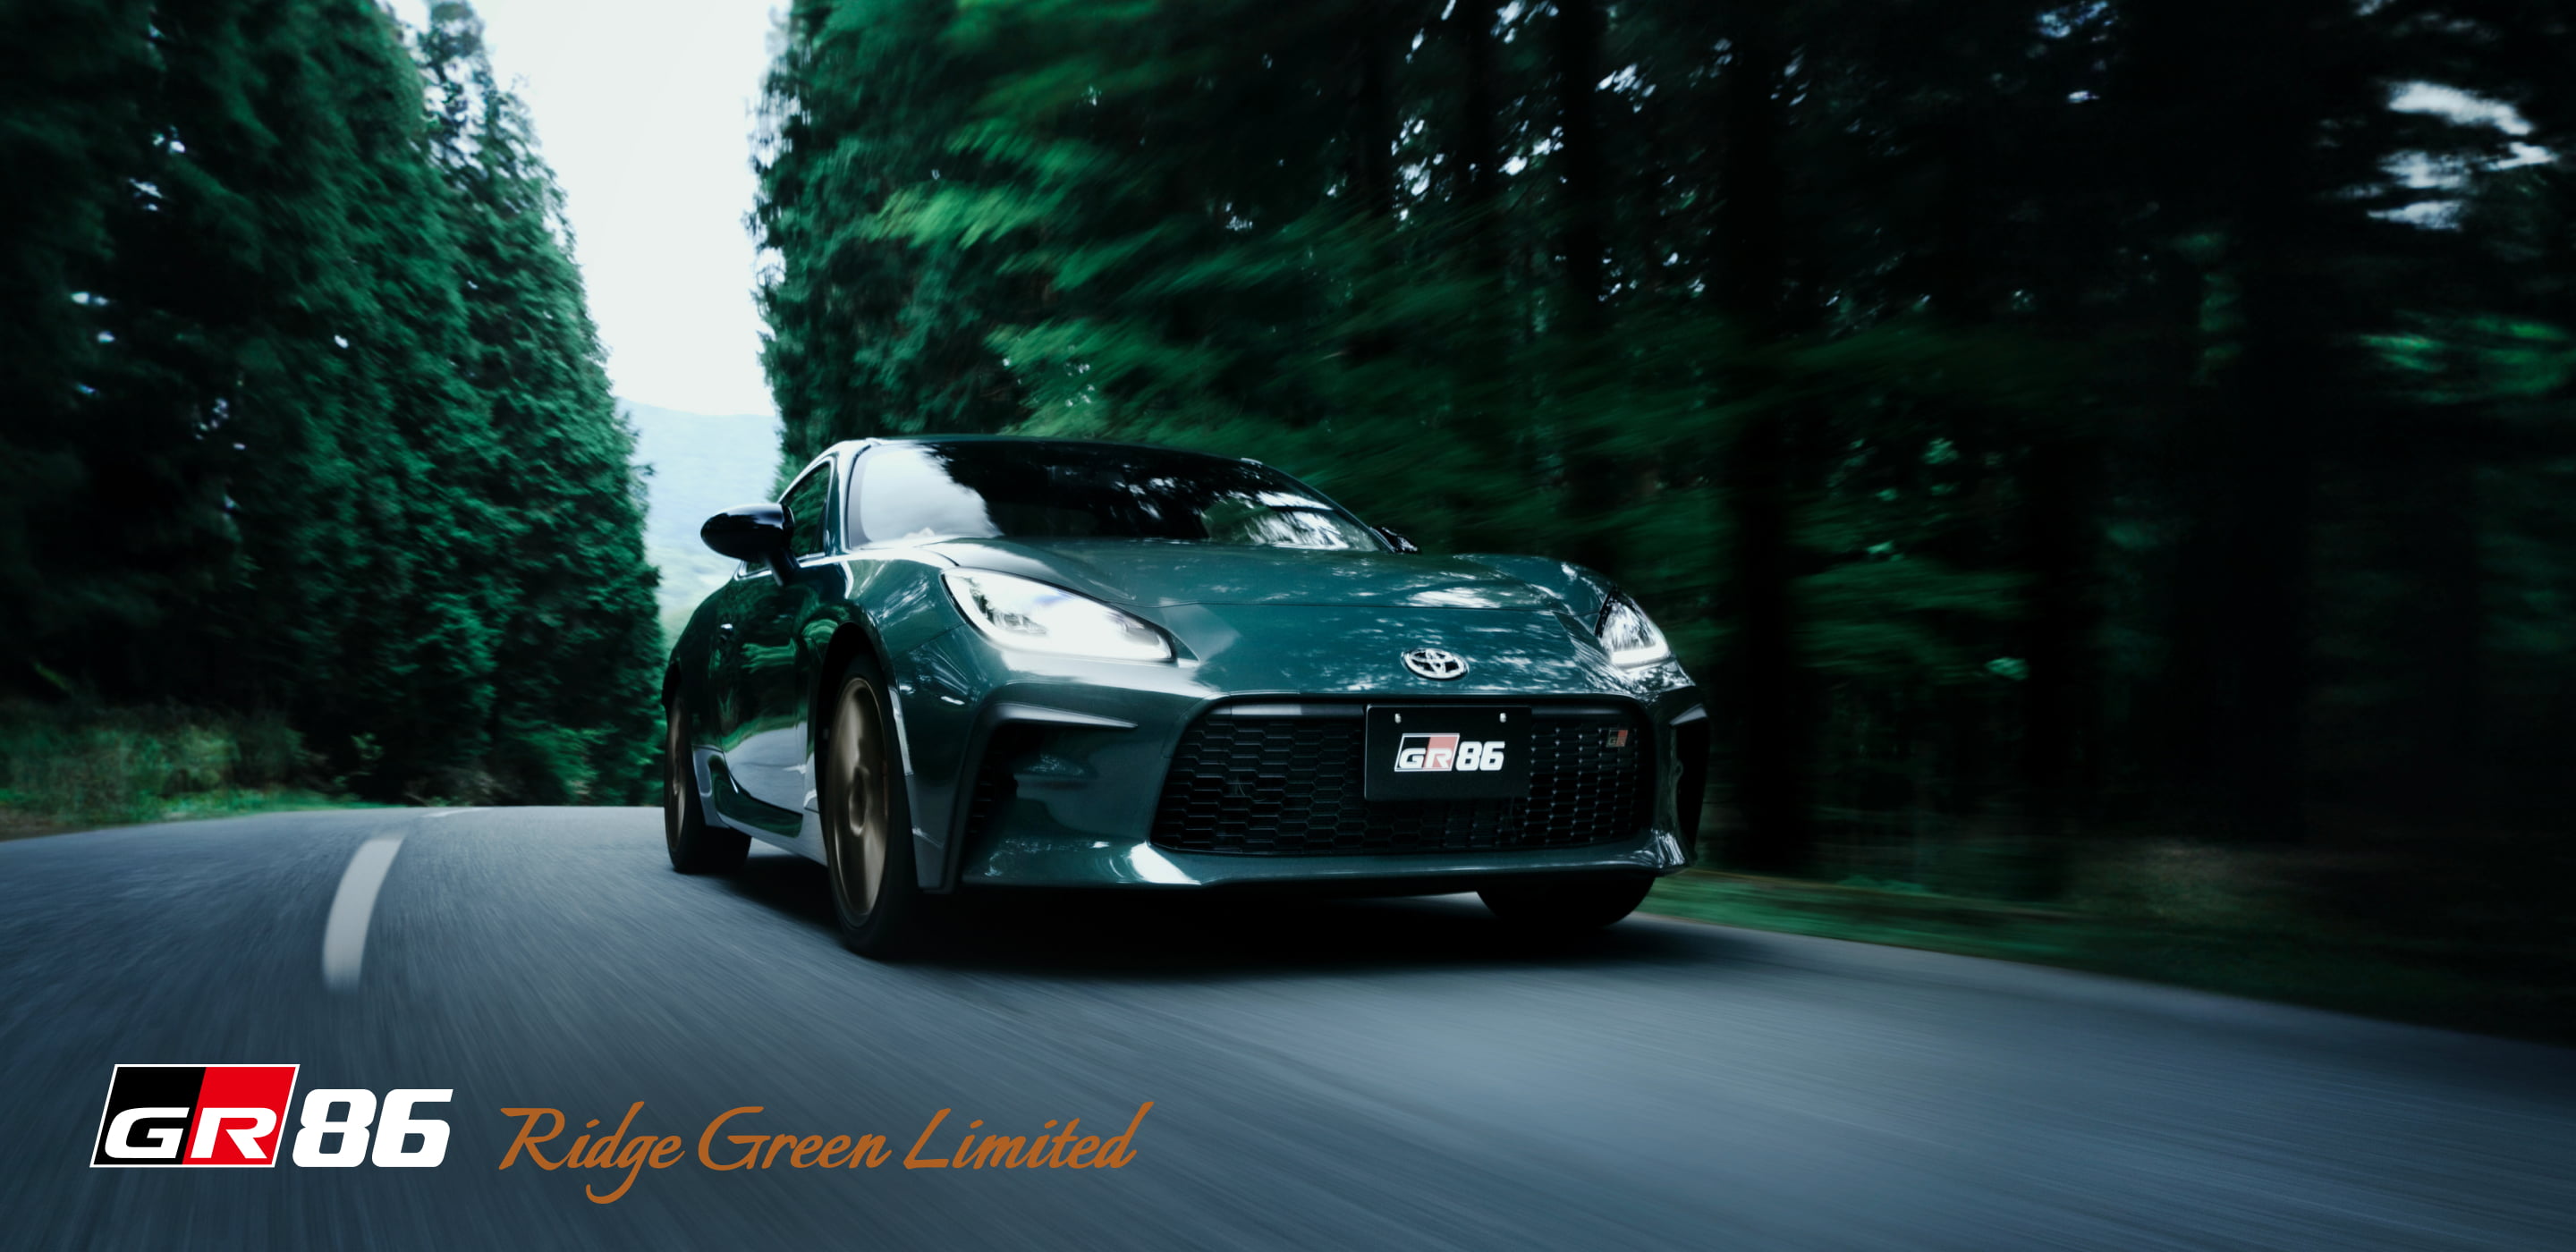 GR86 Ridge Green Limited